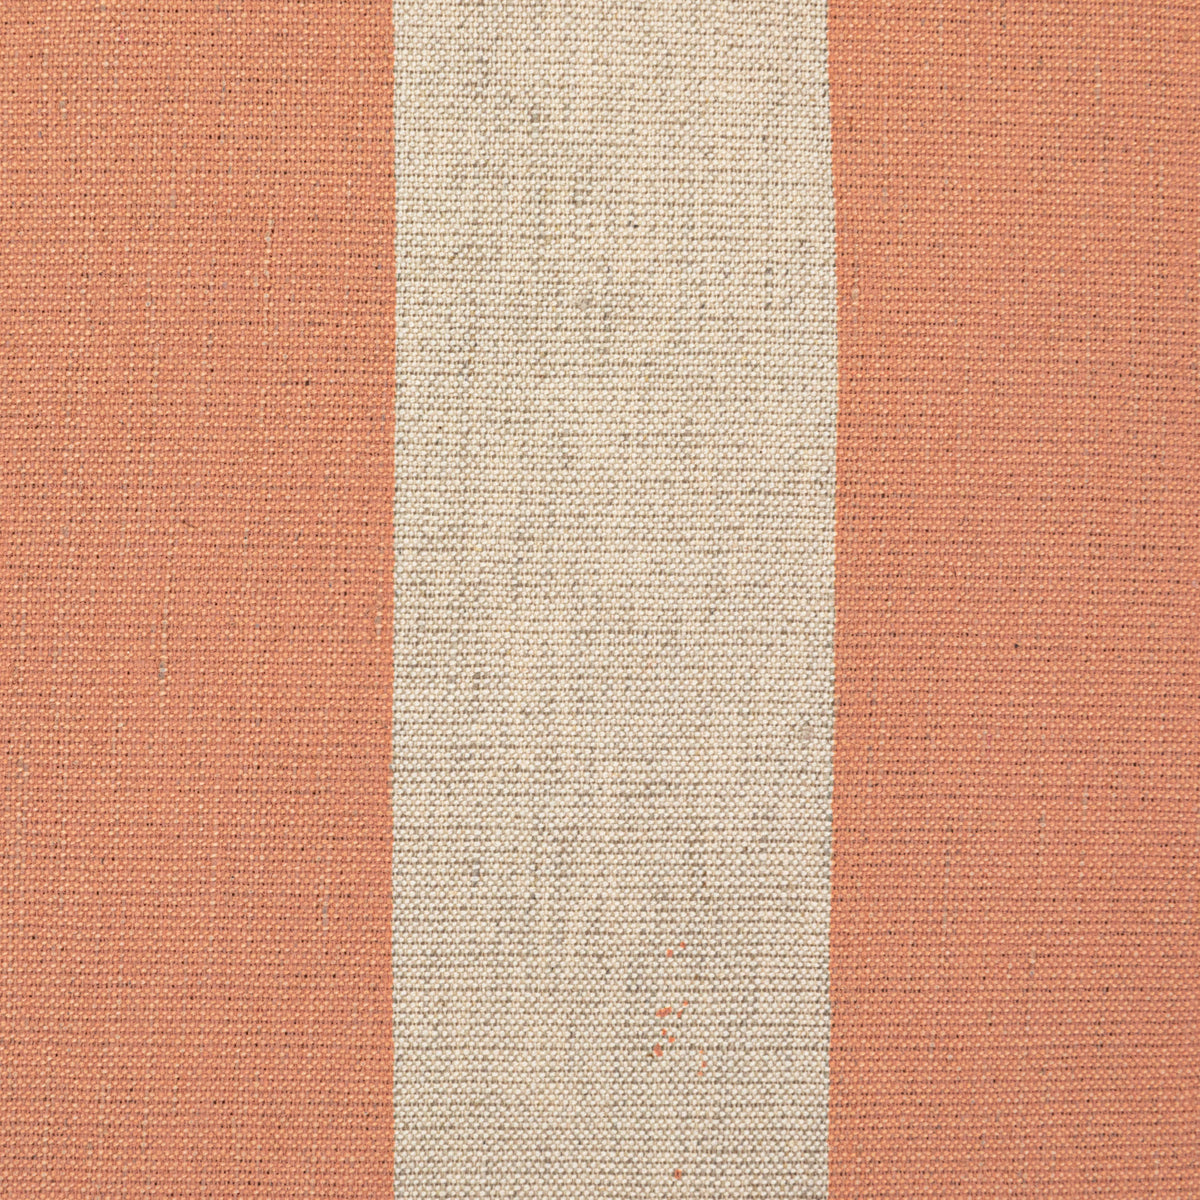 Square Cotton Linen Printed Pillow w Stripes Peach